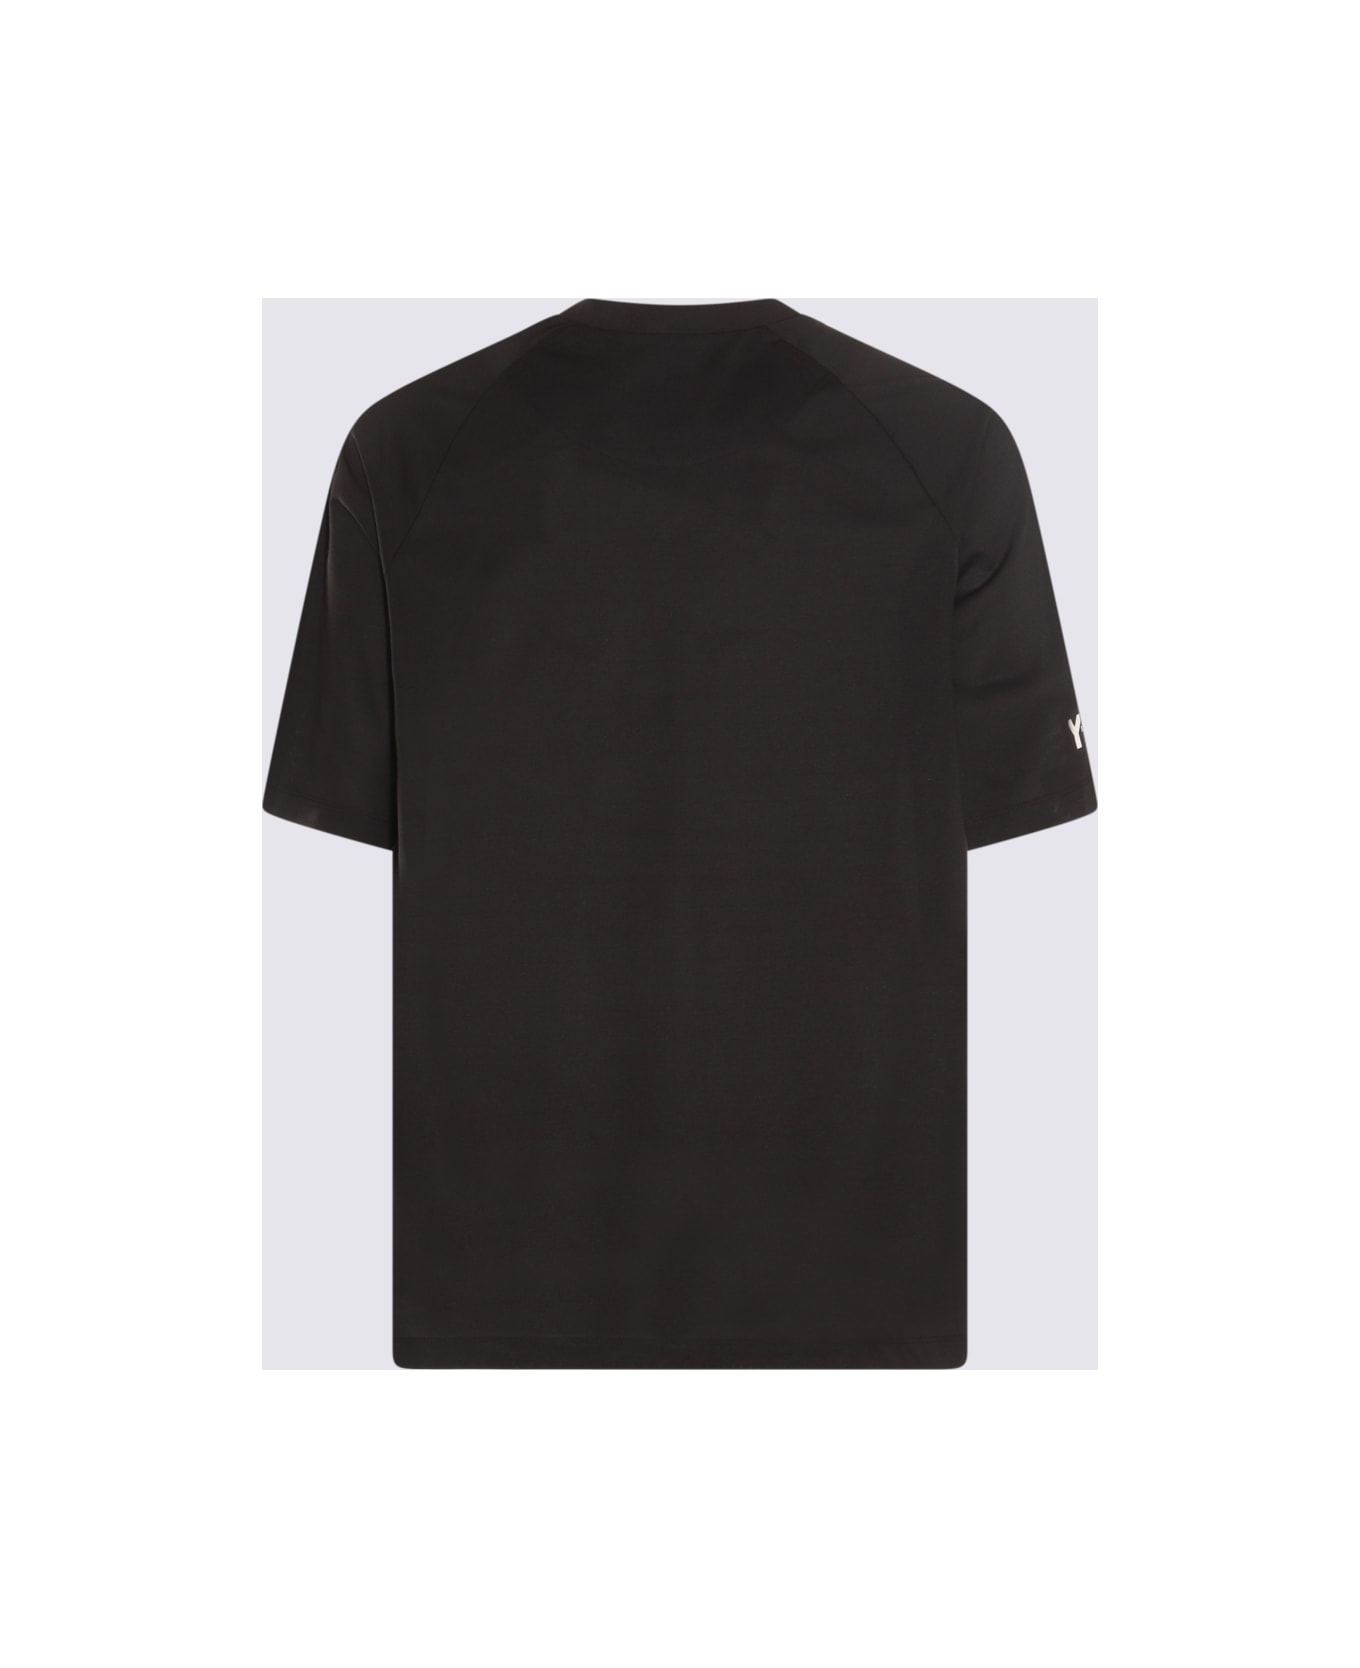 Y-3 Black And Grey Cotton T-shirt - Black